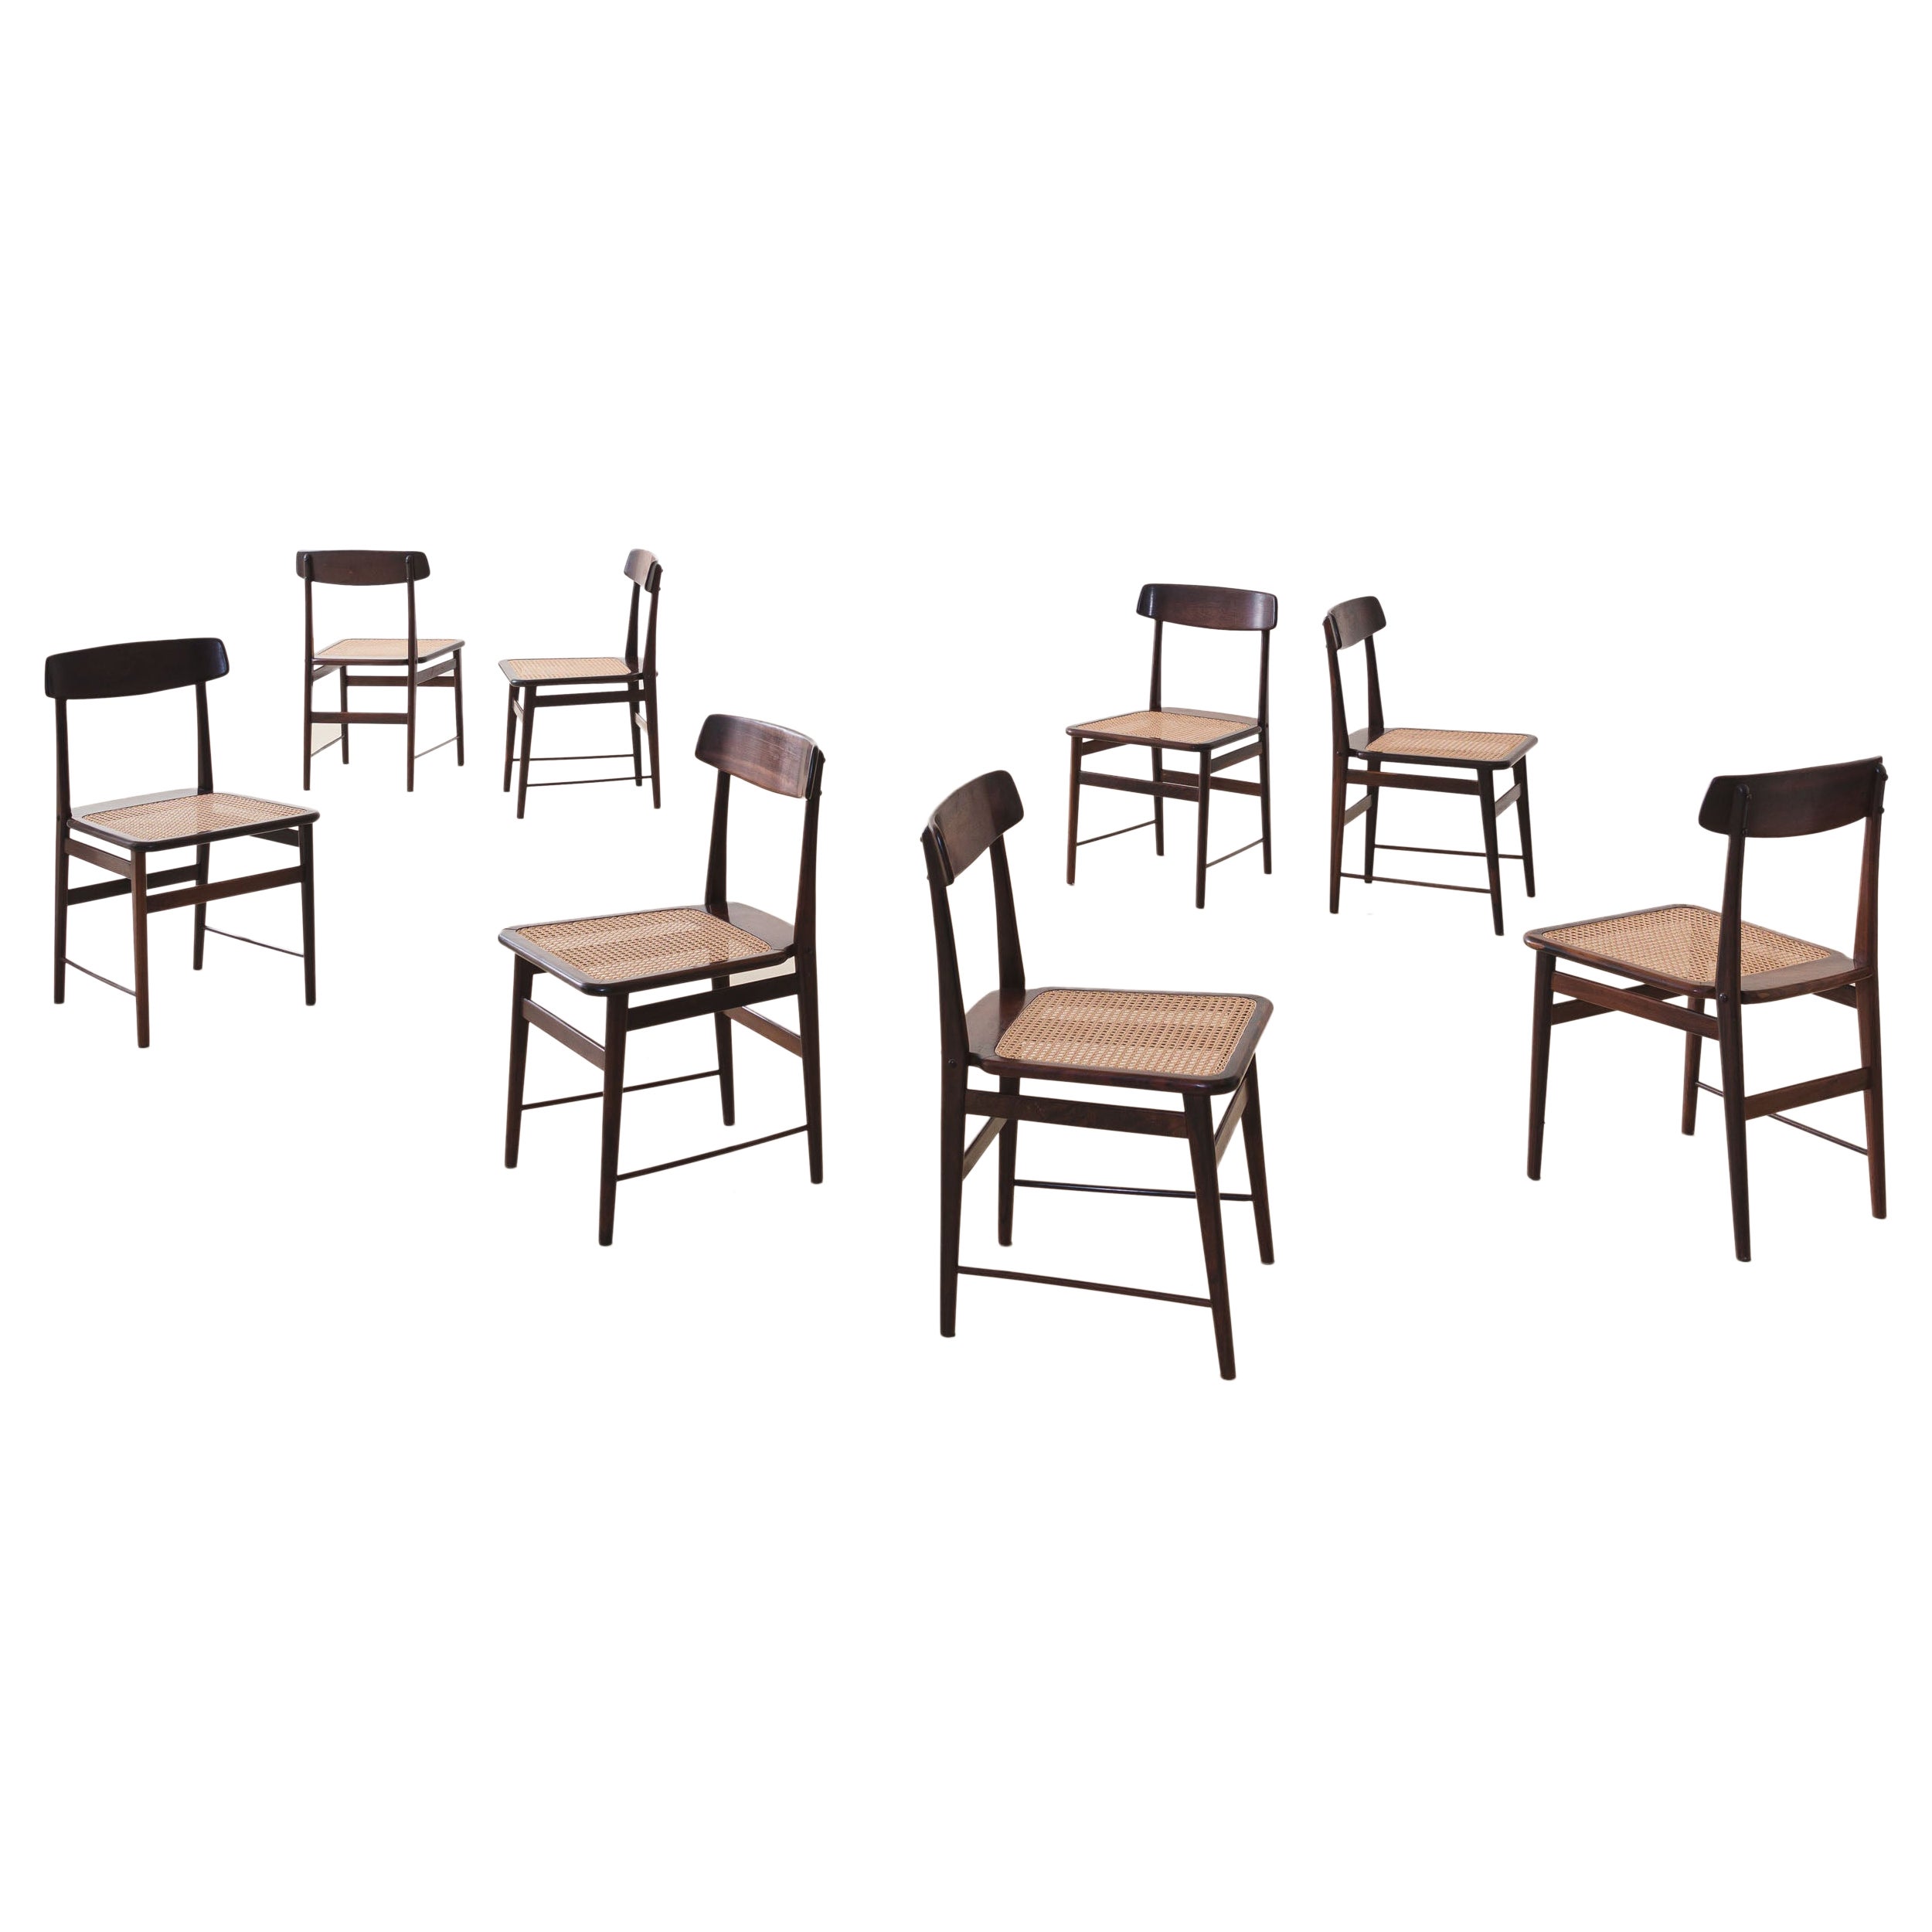 Set of 8 Rosewood ‘Lucio' Chairs, Sergio Rodrigues, 1956, Brazilian Midcentury